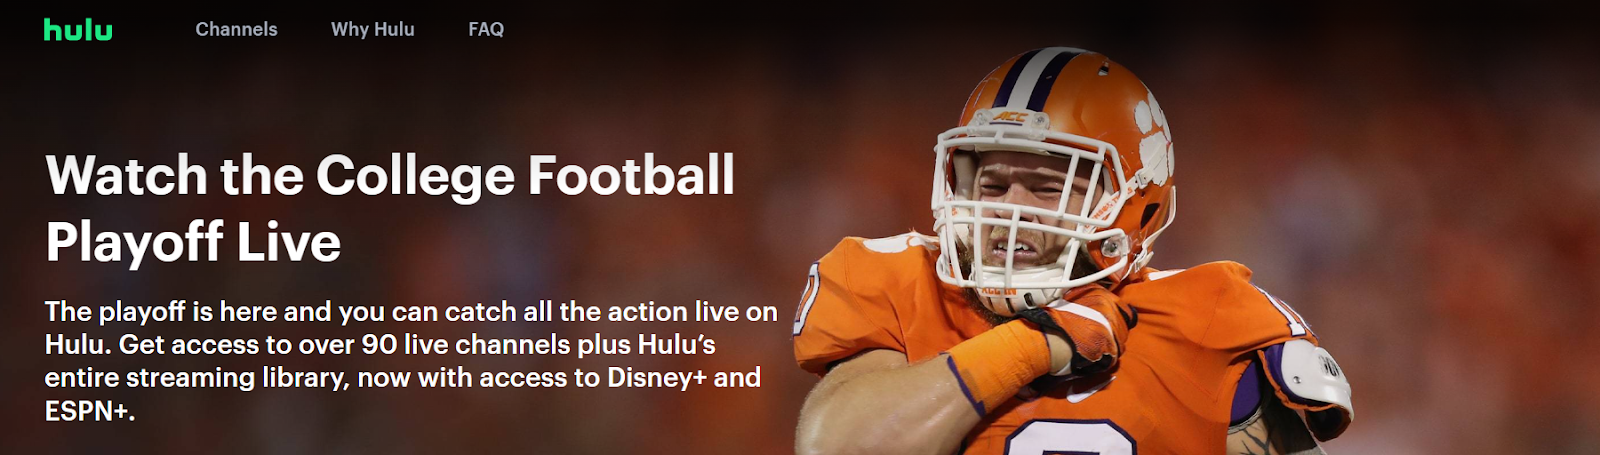 Hulu + Live TV has college football
